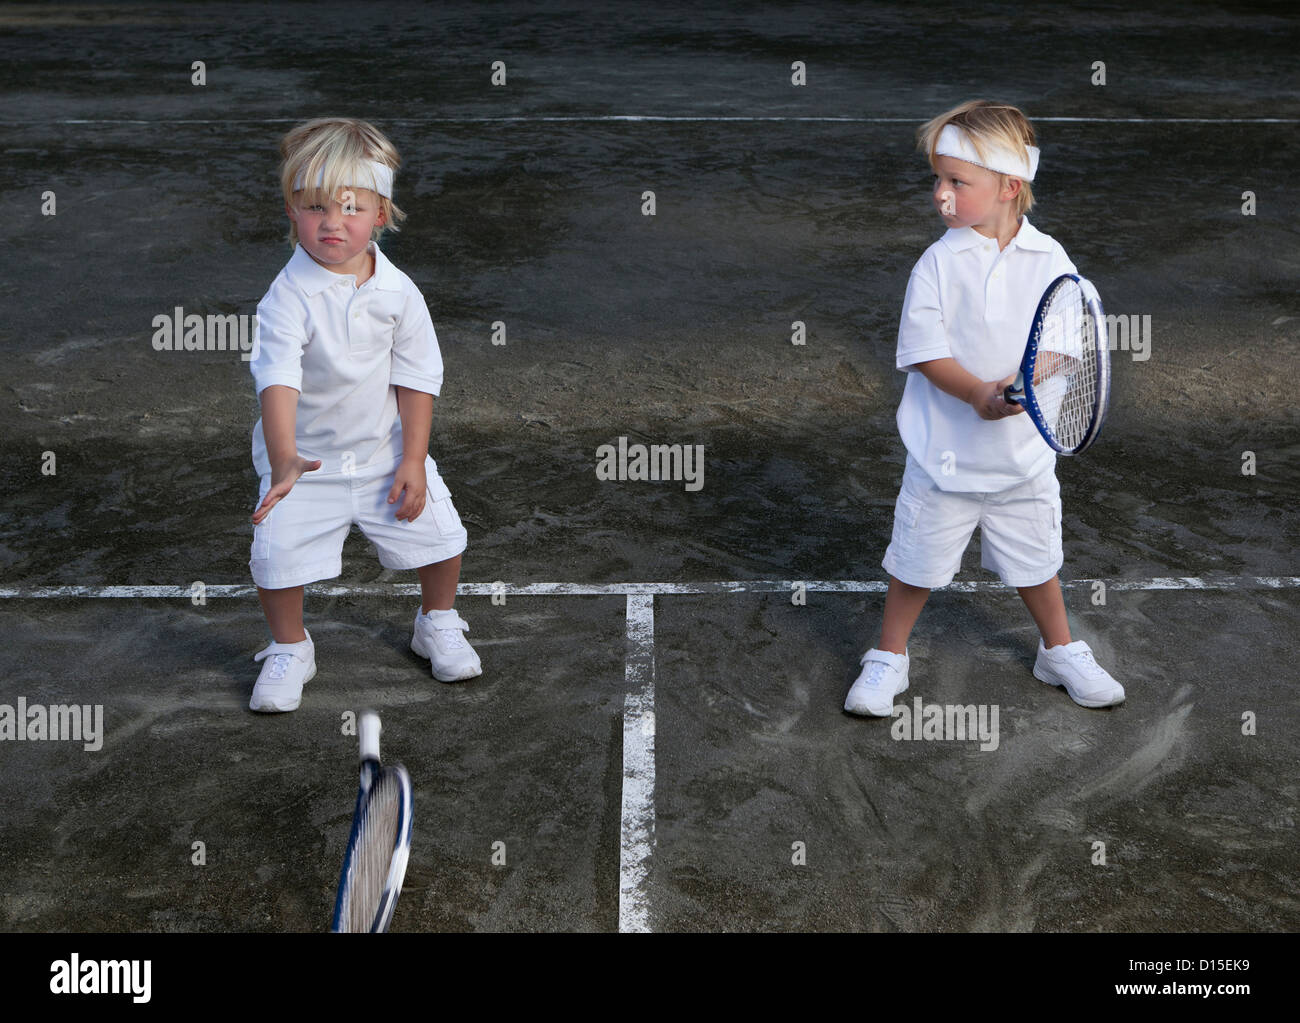 USA, Arizona, Texarkana, deux garçons (2-3 ans) à jouer au tennis Banque D'Images